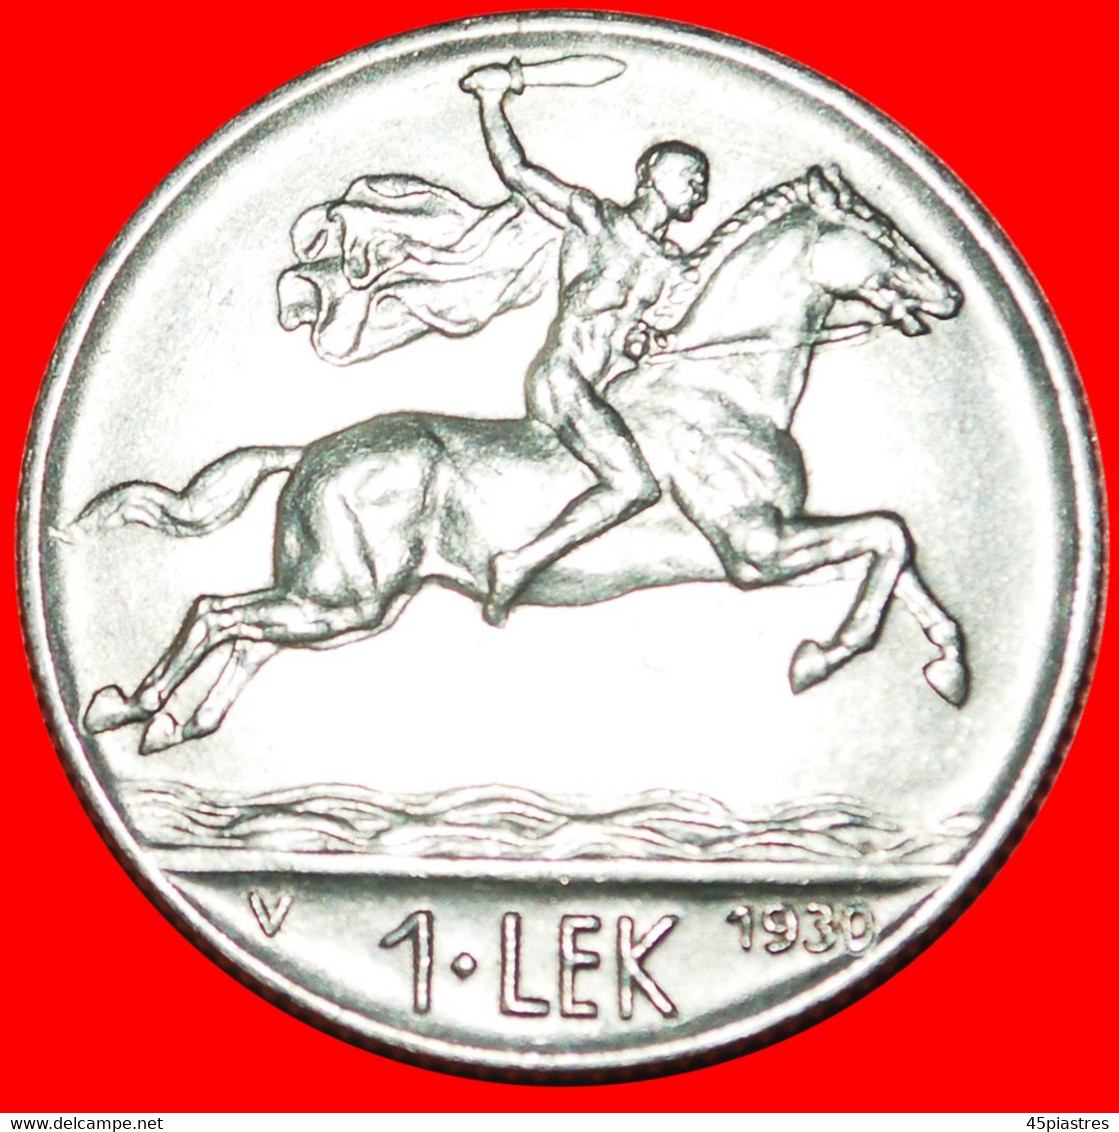 • AUSTRIA: ALBANIA ★ 1 LEK 1930V MINT LUSTER! ALEXANDER THE GREAT (336-323 BCE)! LOW START ★ NO RESERVE! - Albania